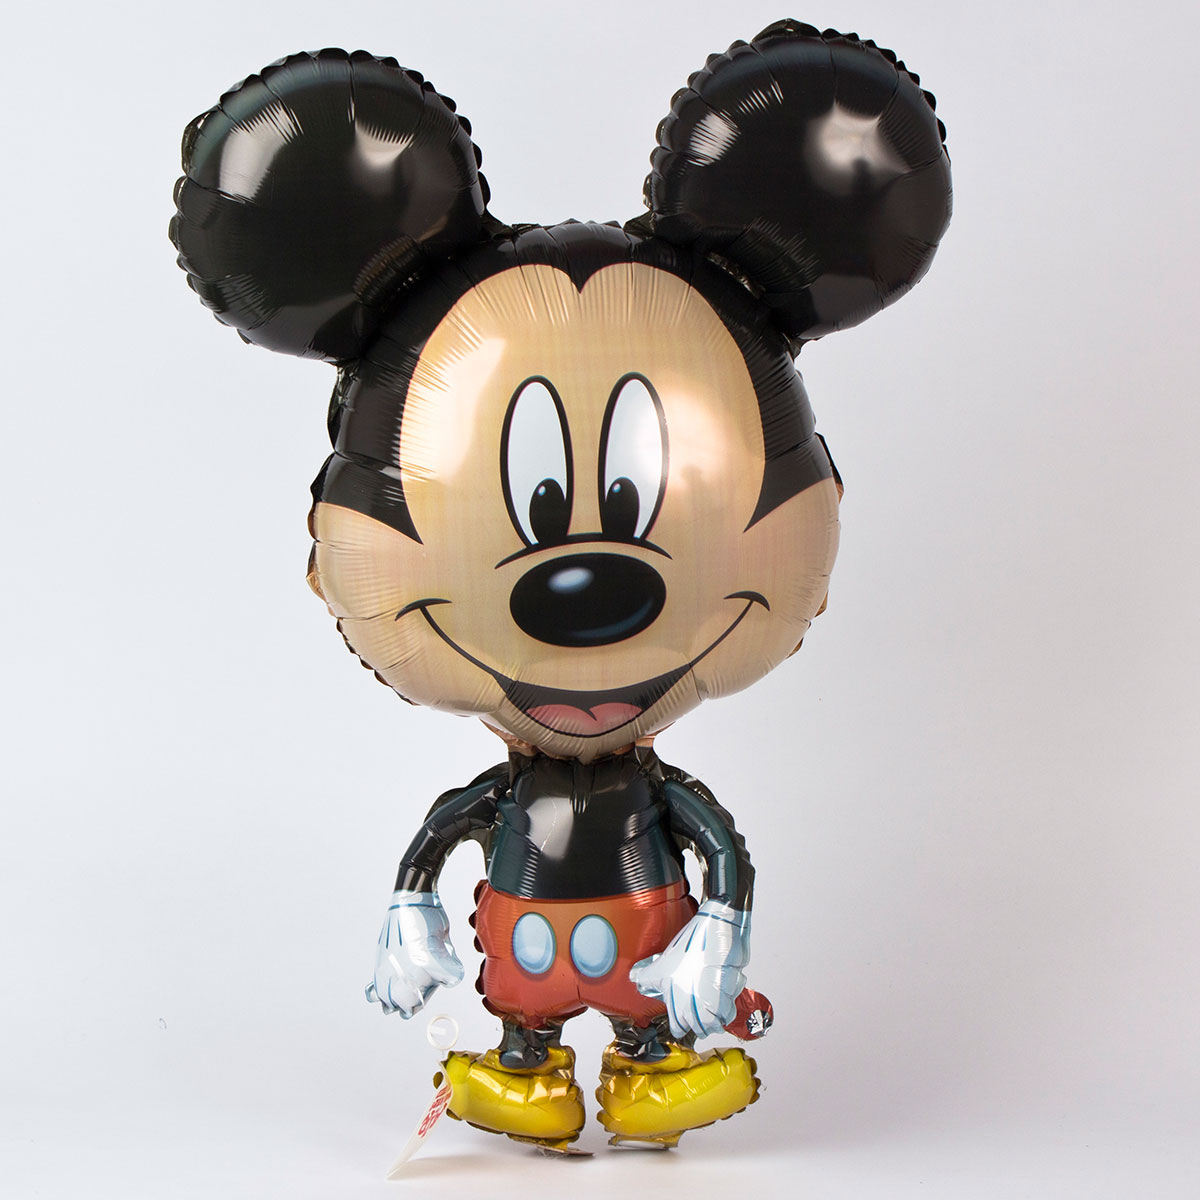 Disney Mickey Mouse - Large Airwalker Balloon (Deflated)